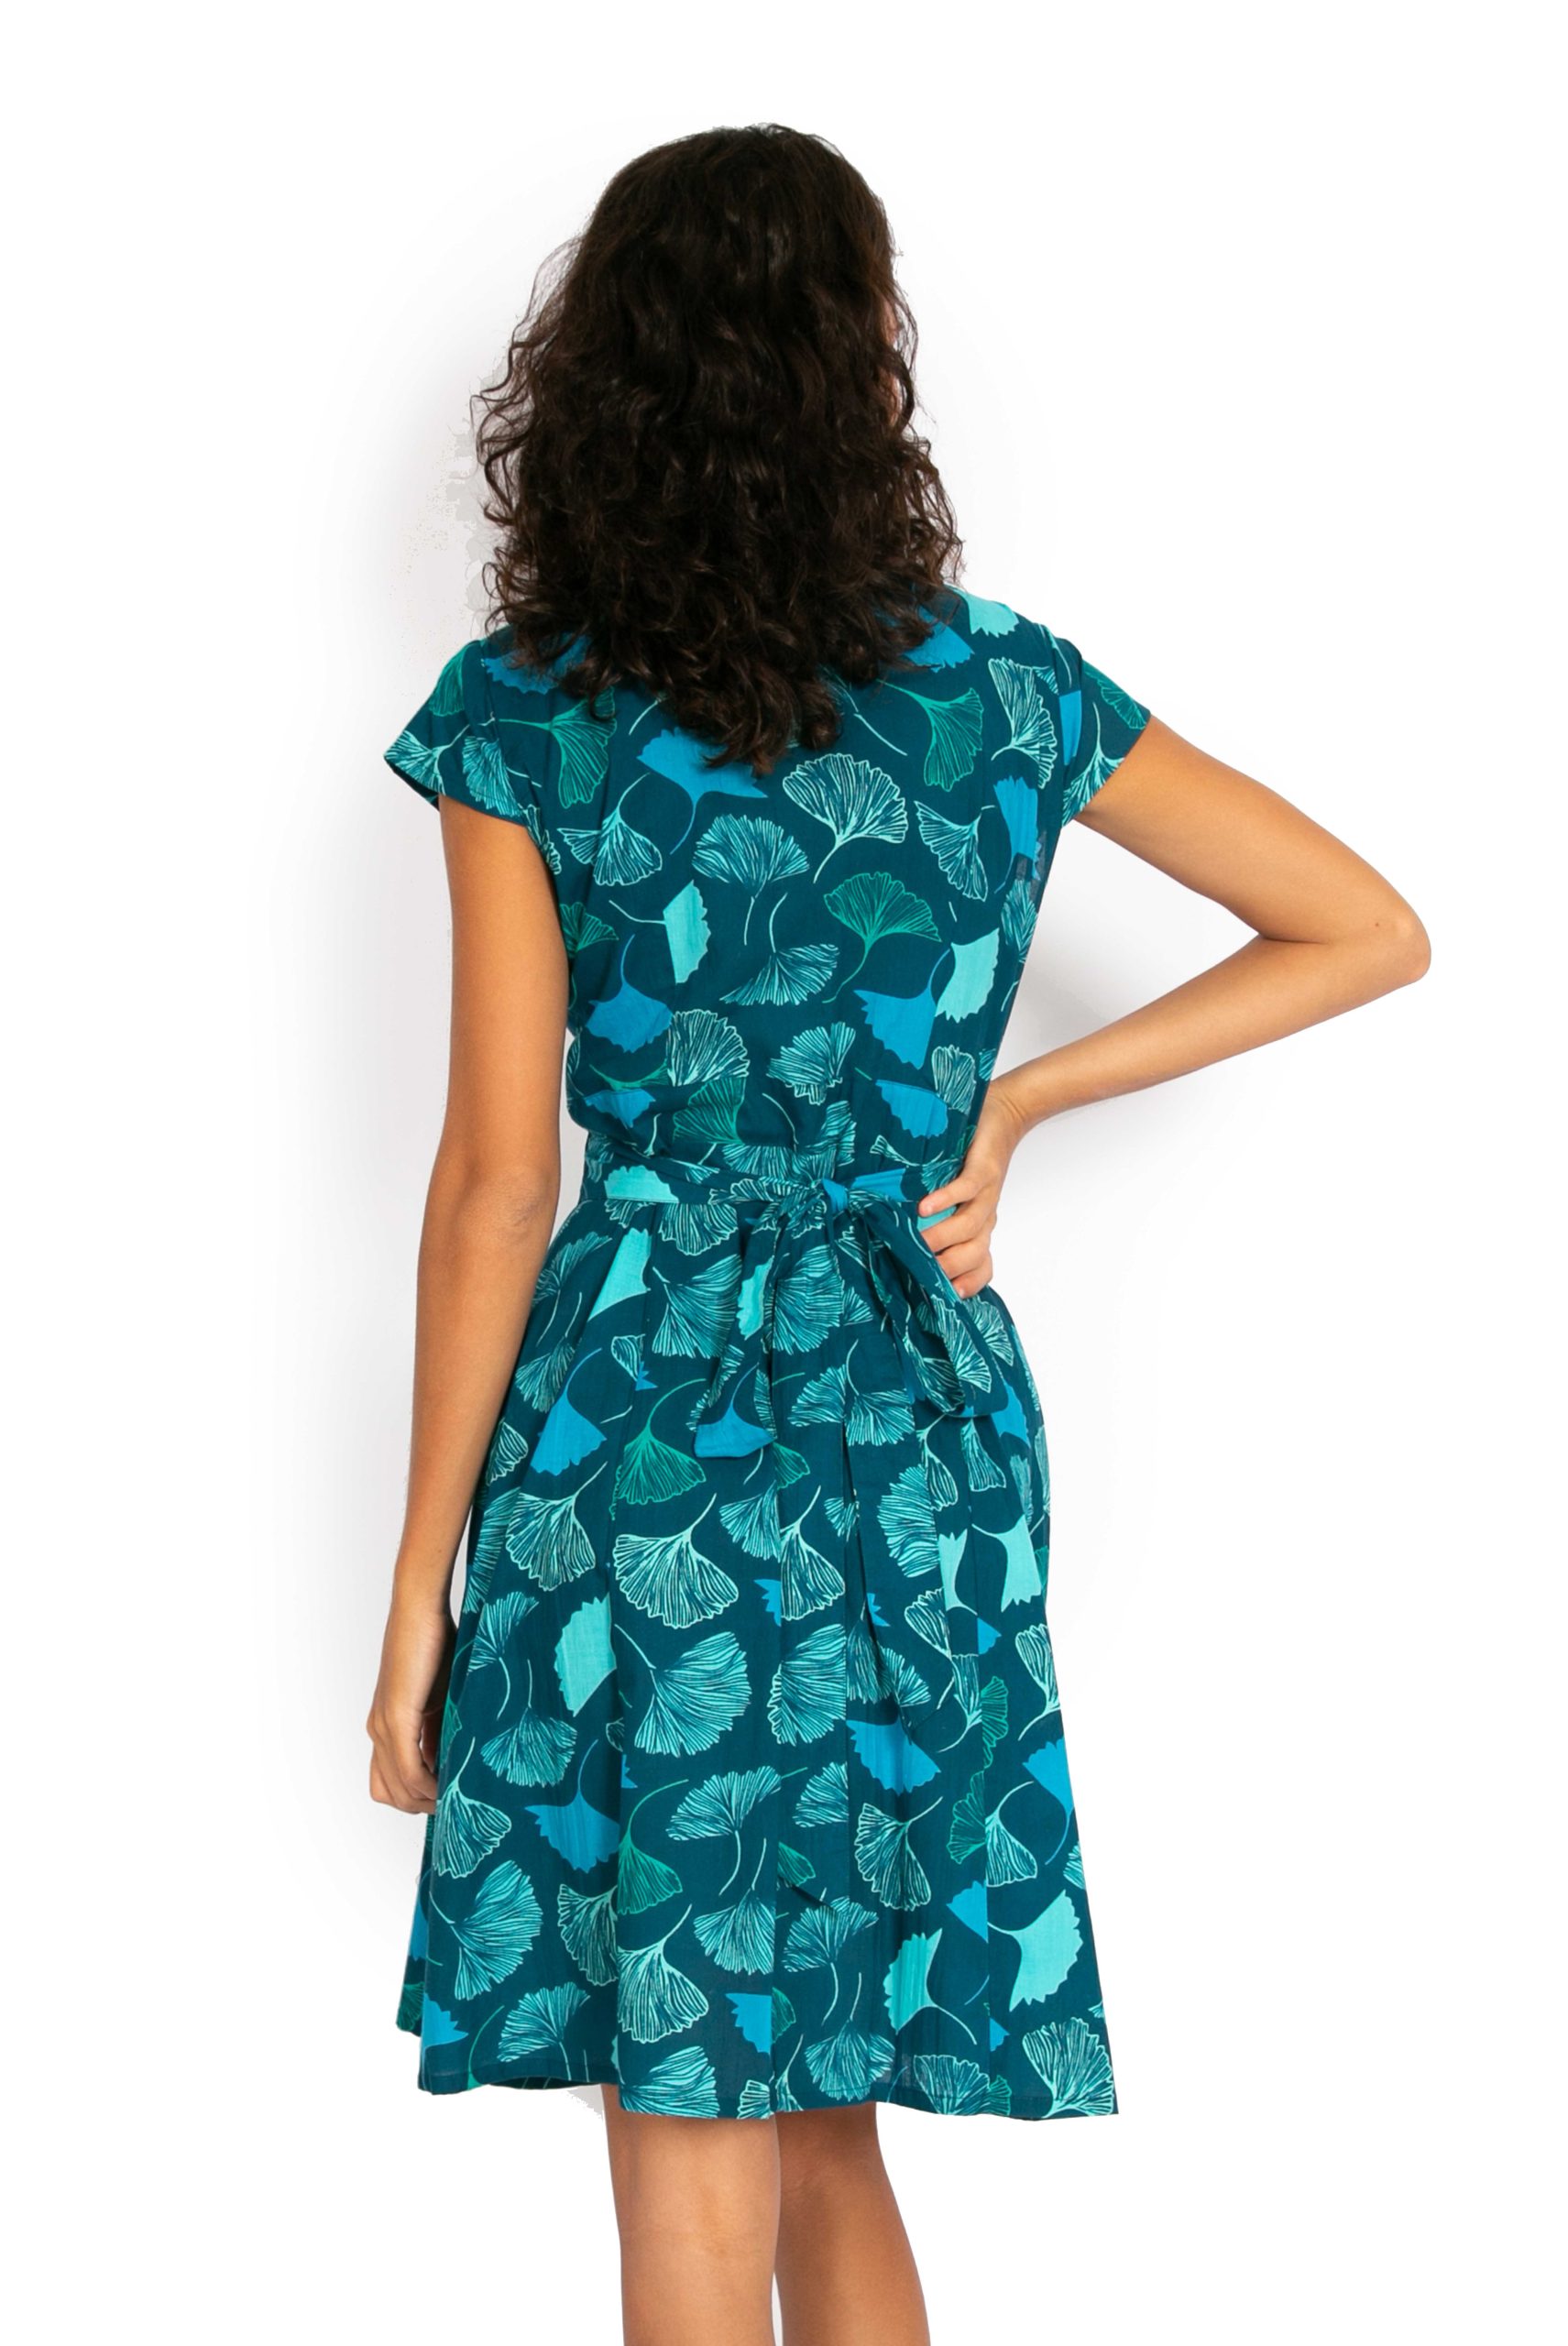 Rose Wrap Dress - Turquoise Ginkgo Garden - OM Designs